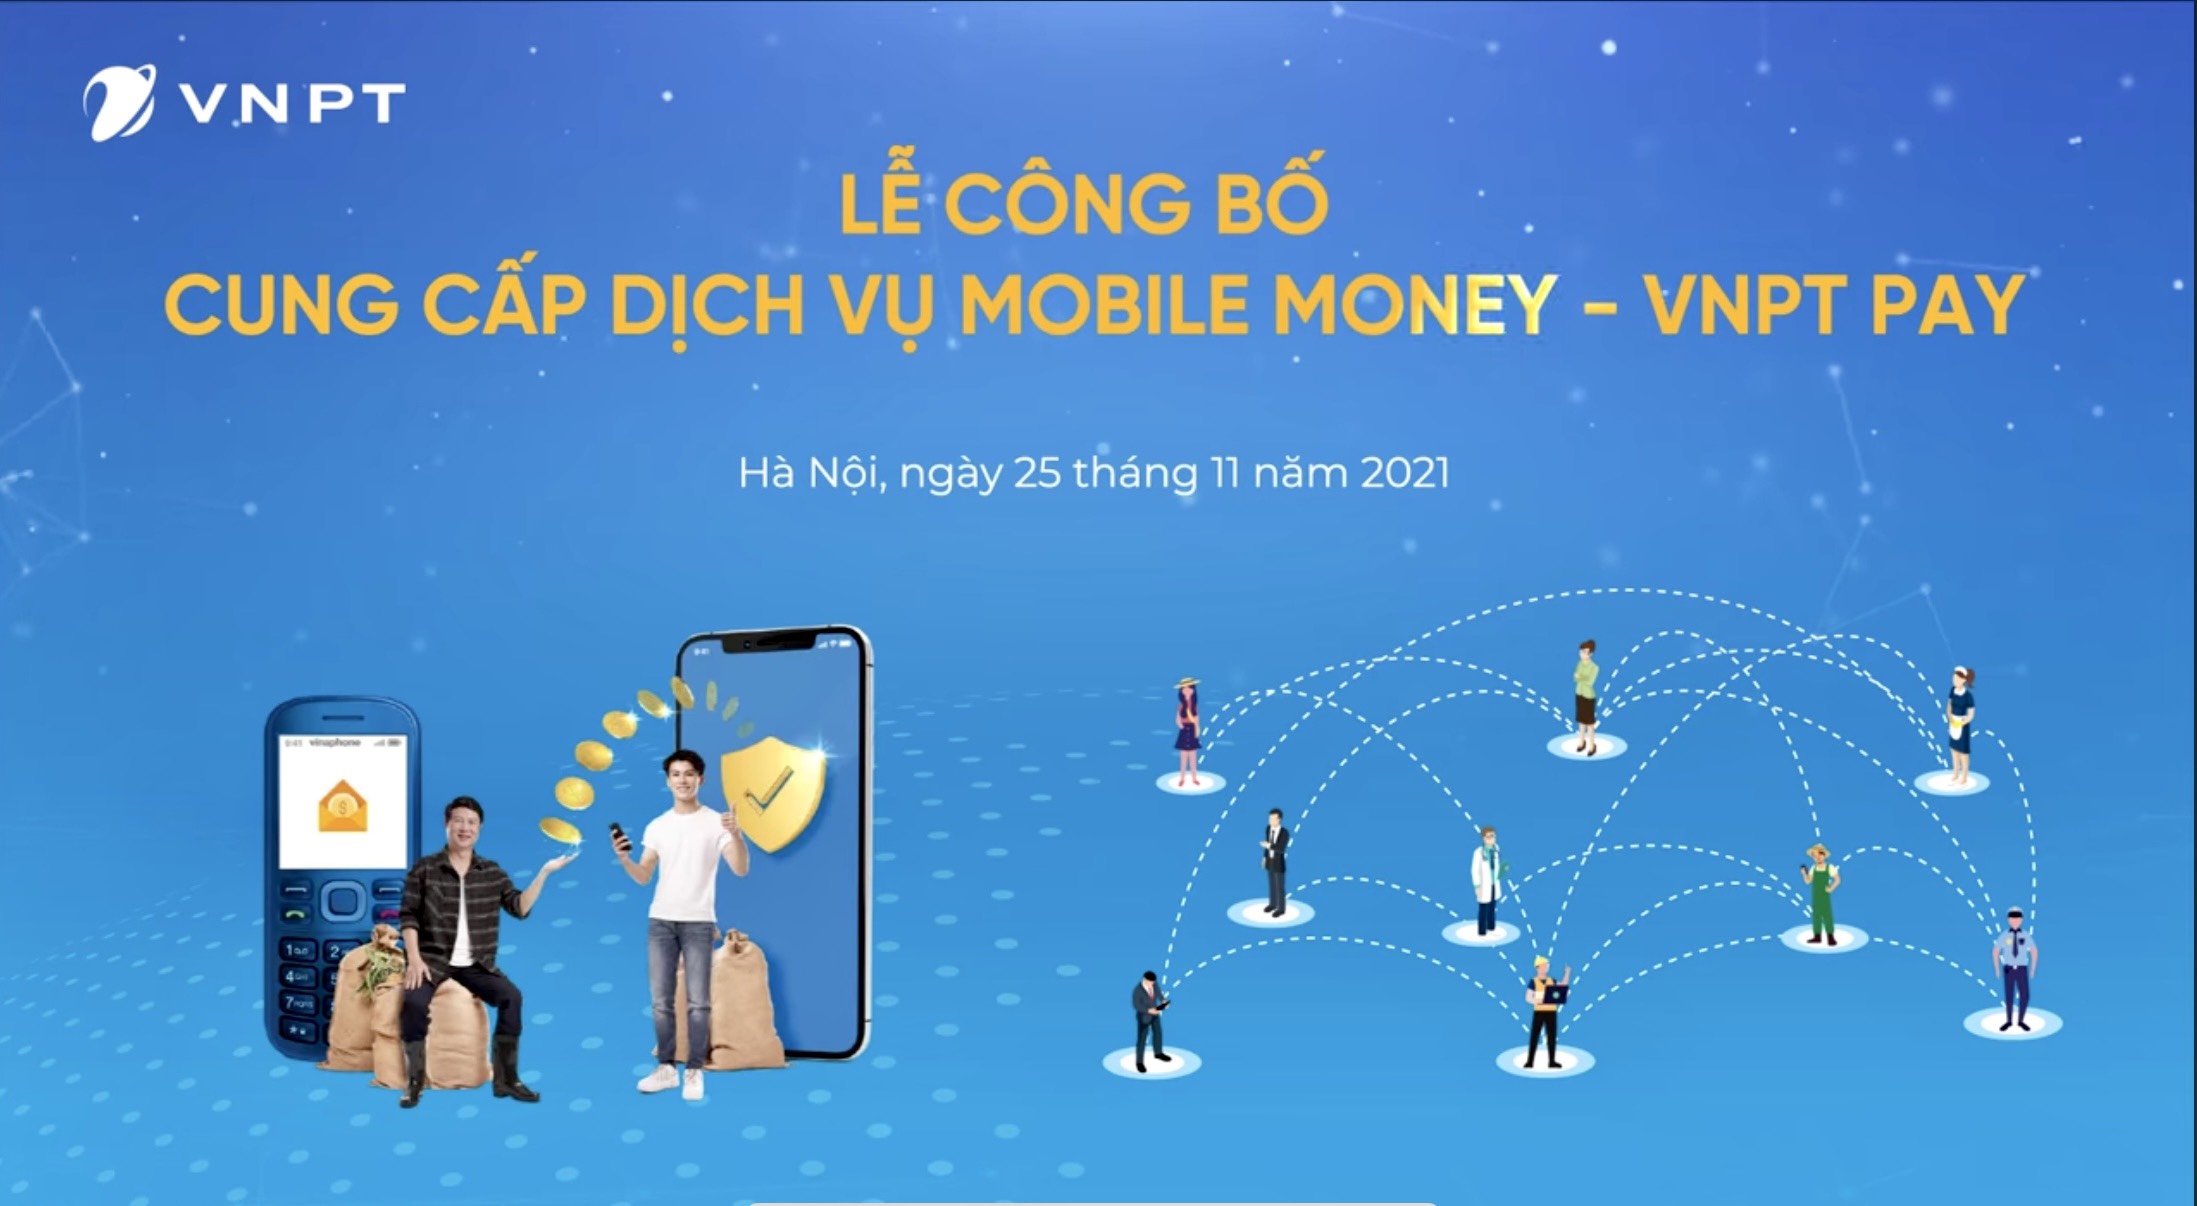 Lễ ra mắt dịch vụ Mobile Money VNPT